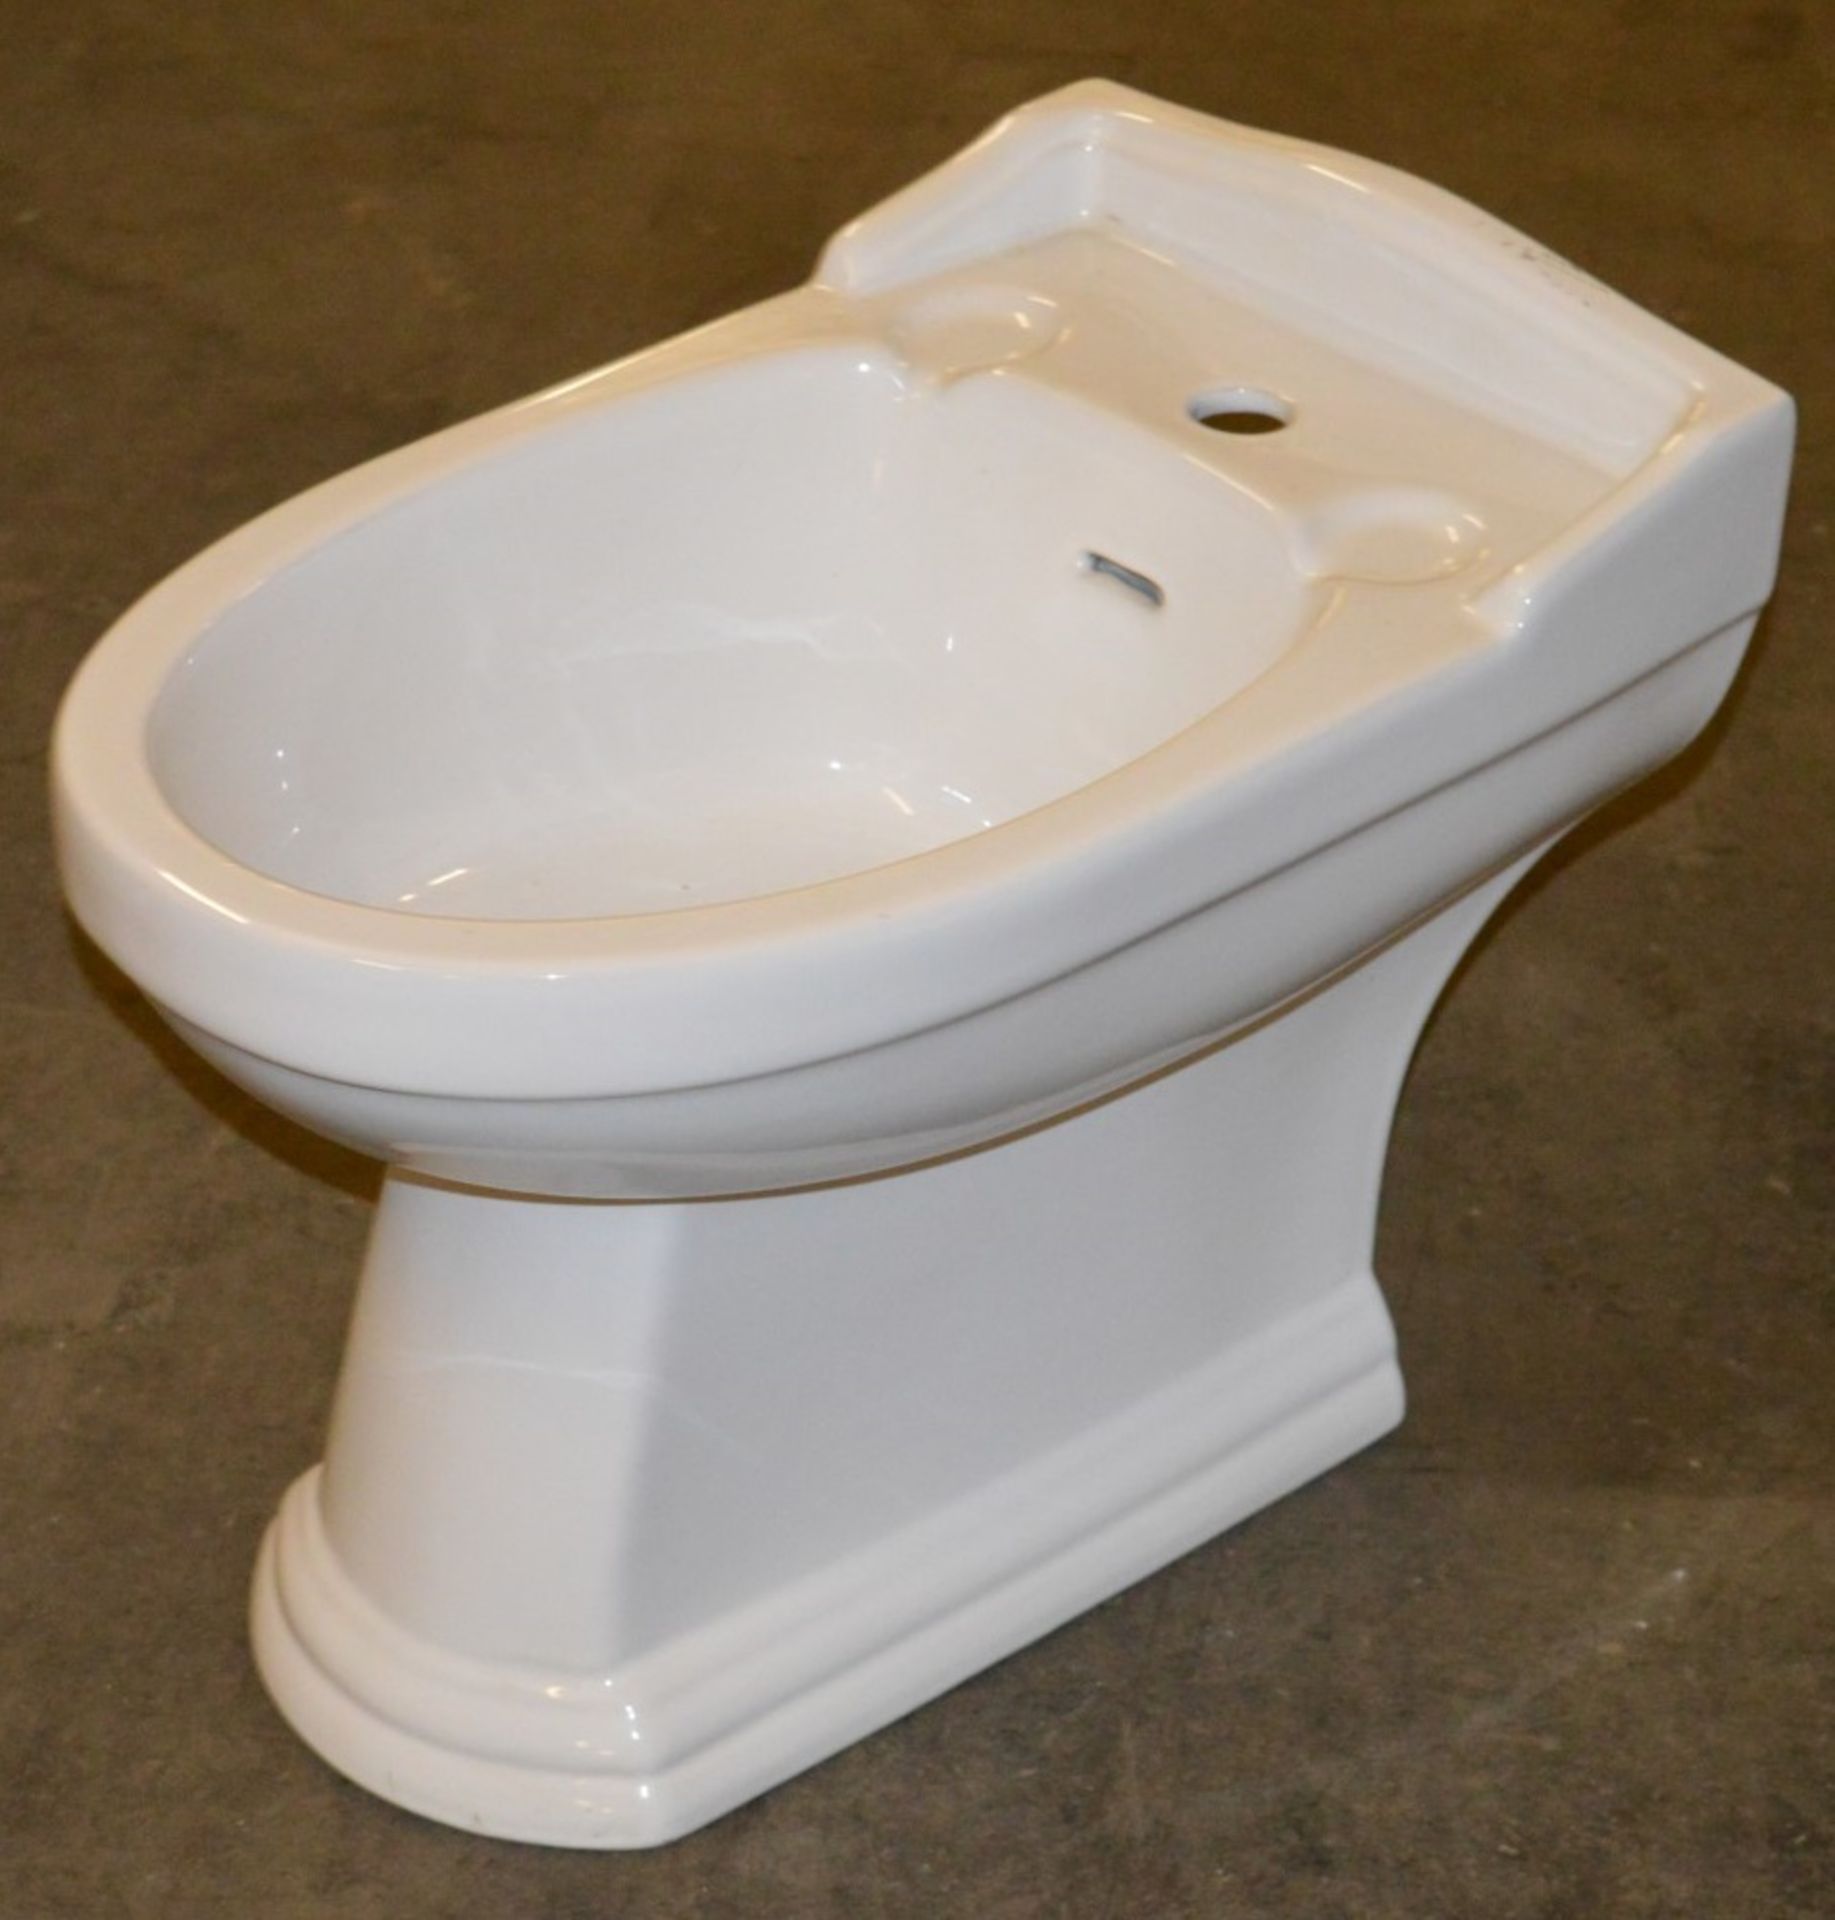 1 x Vogue Bathrooms DAVENPORT Bidet - Brand New Stock - Modern White Ceramic Bathroom Stock -